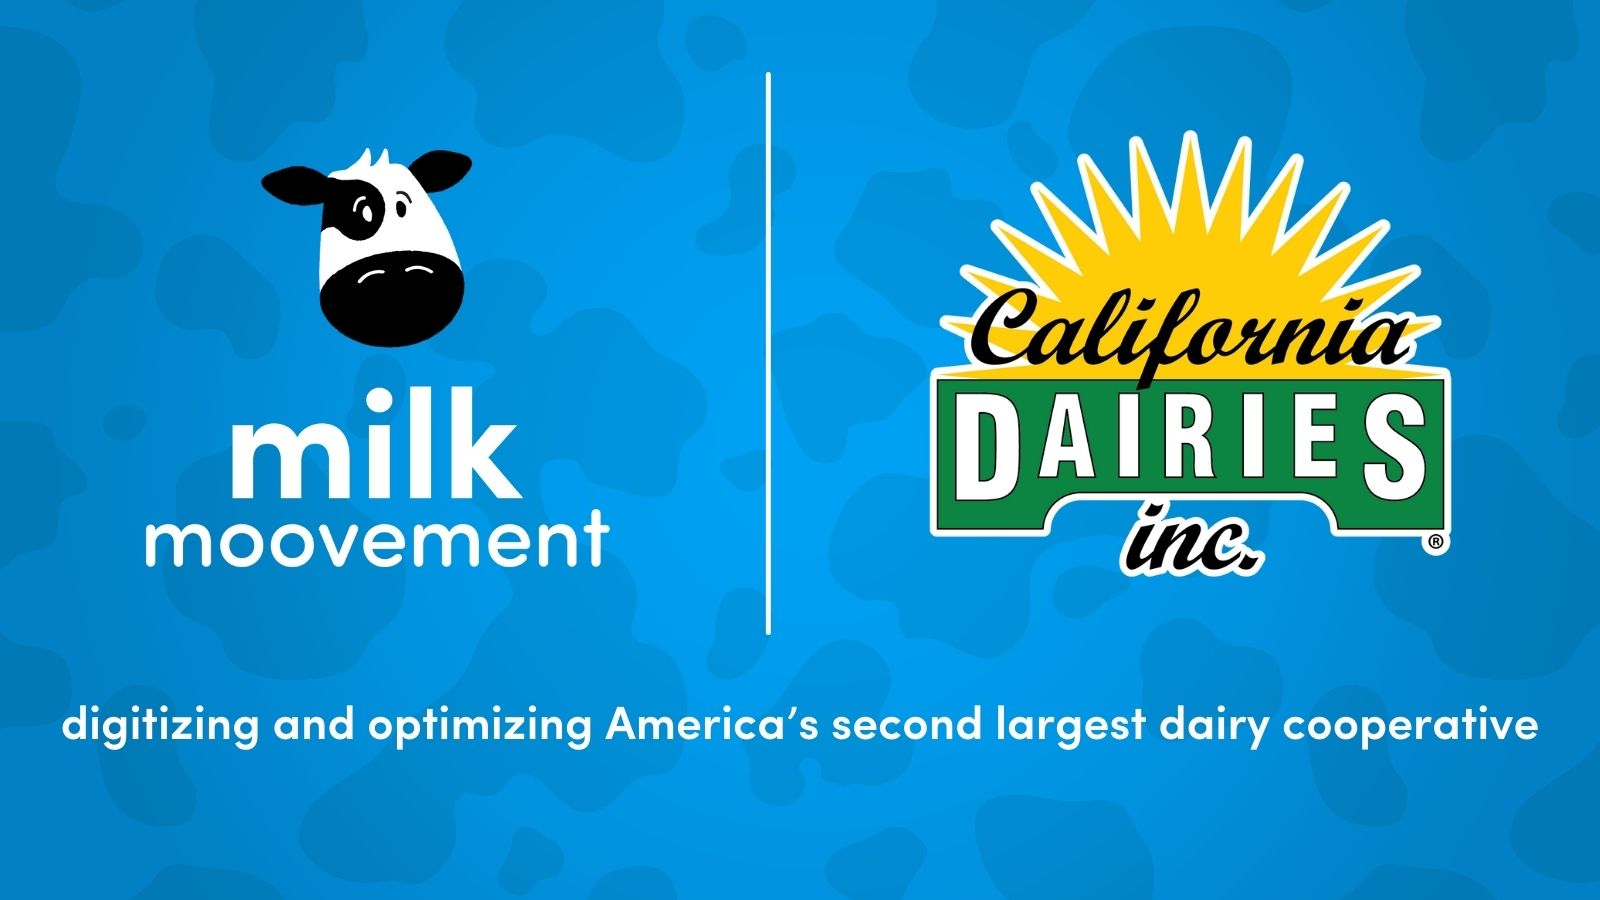 Digitizing and optimizing America's second largest dairy cooperative: California Dairies Inc